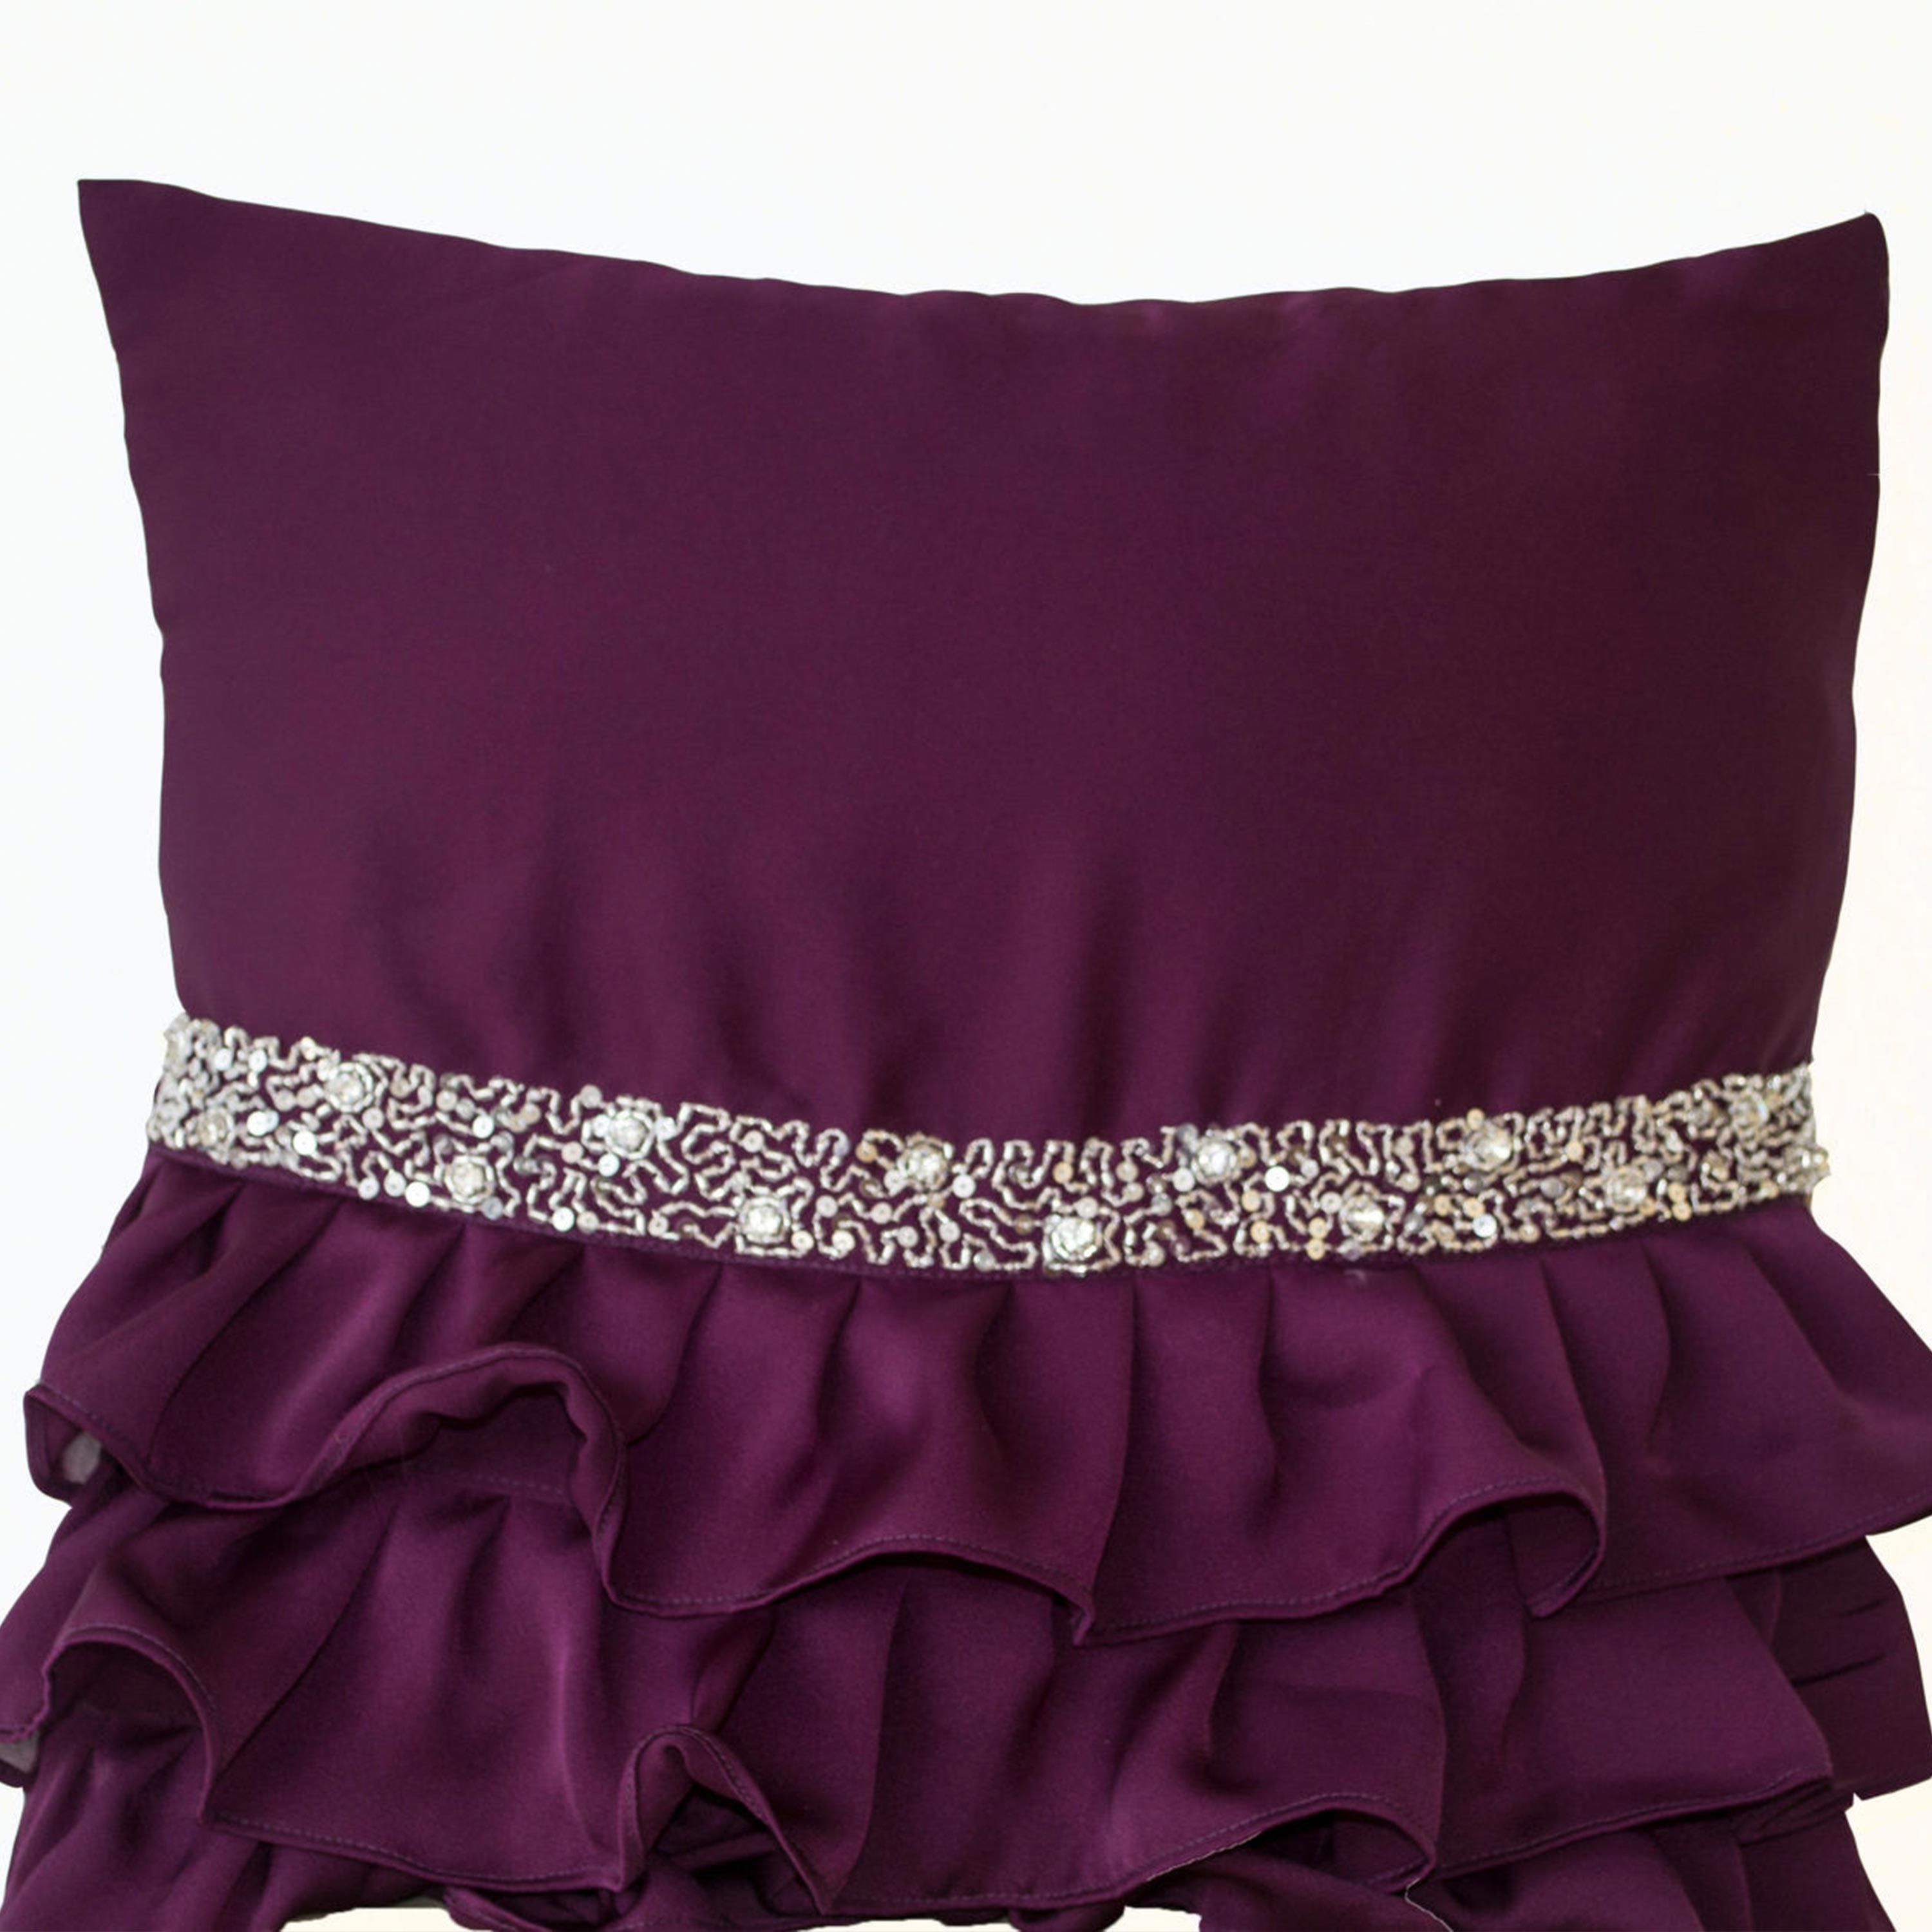 Purple ruffled sequin throw pillow - Decorative Pillow -Black cushion cover -Gift Pillow - Crystal Pillow -Black silver seuin pillow